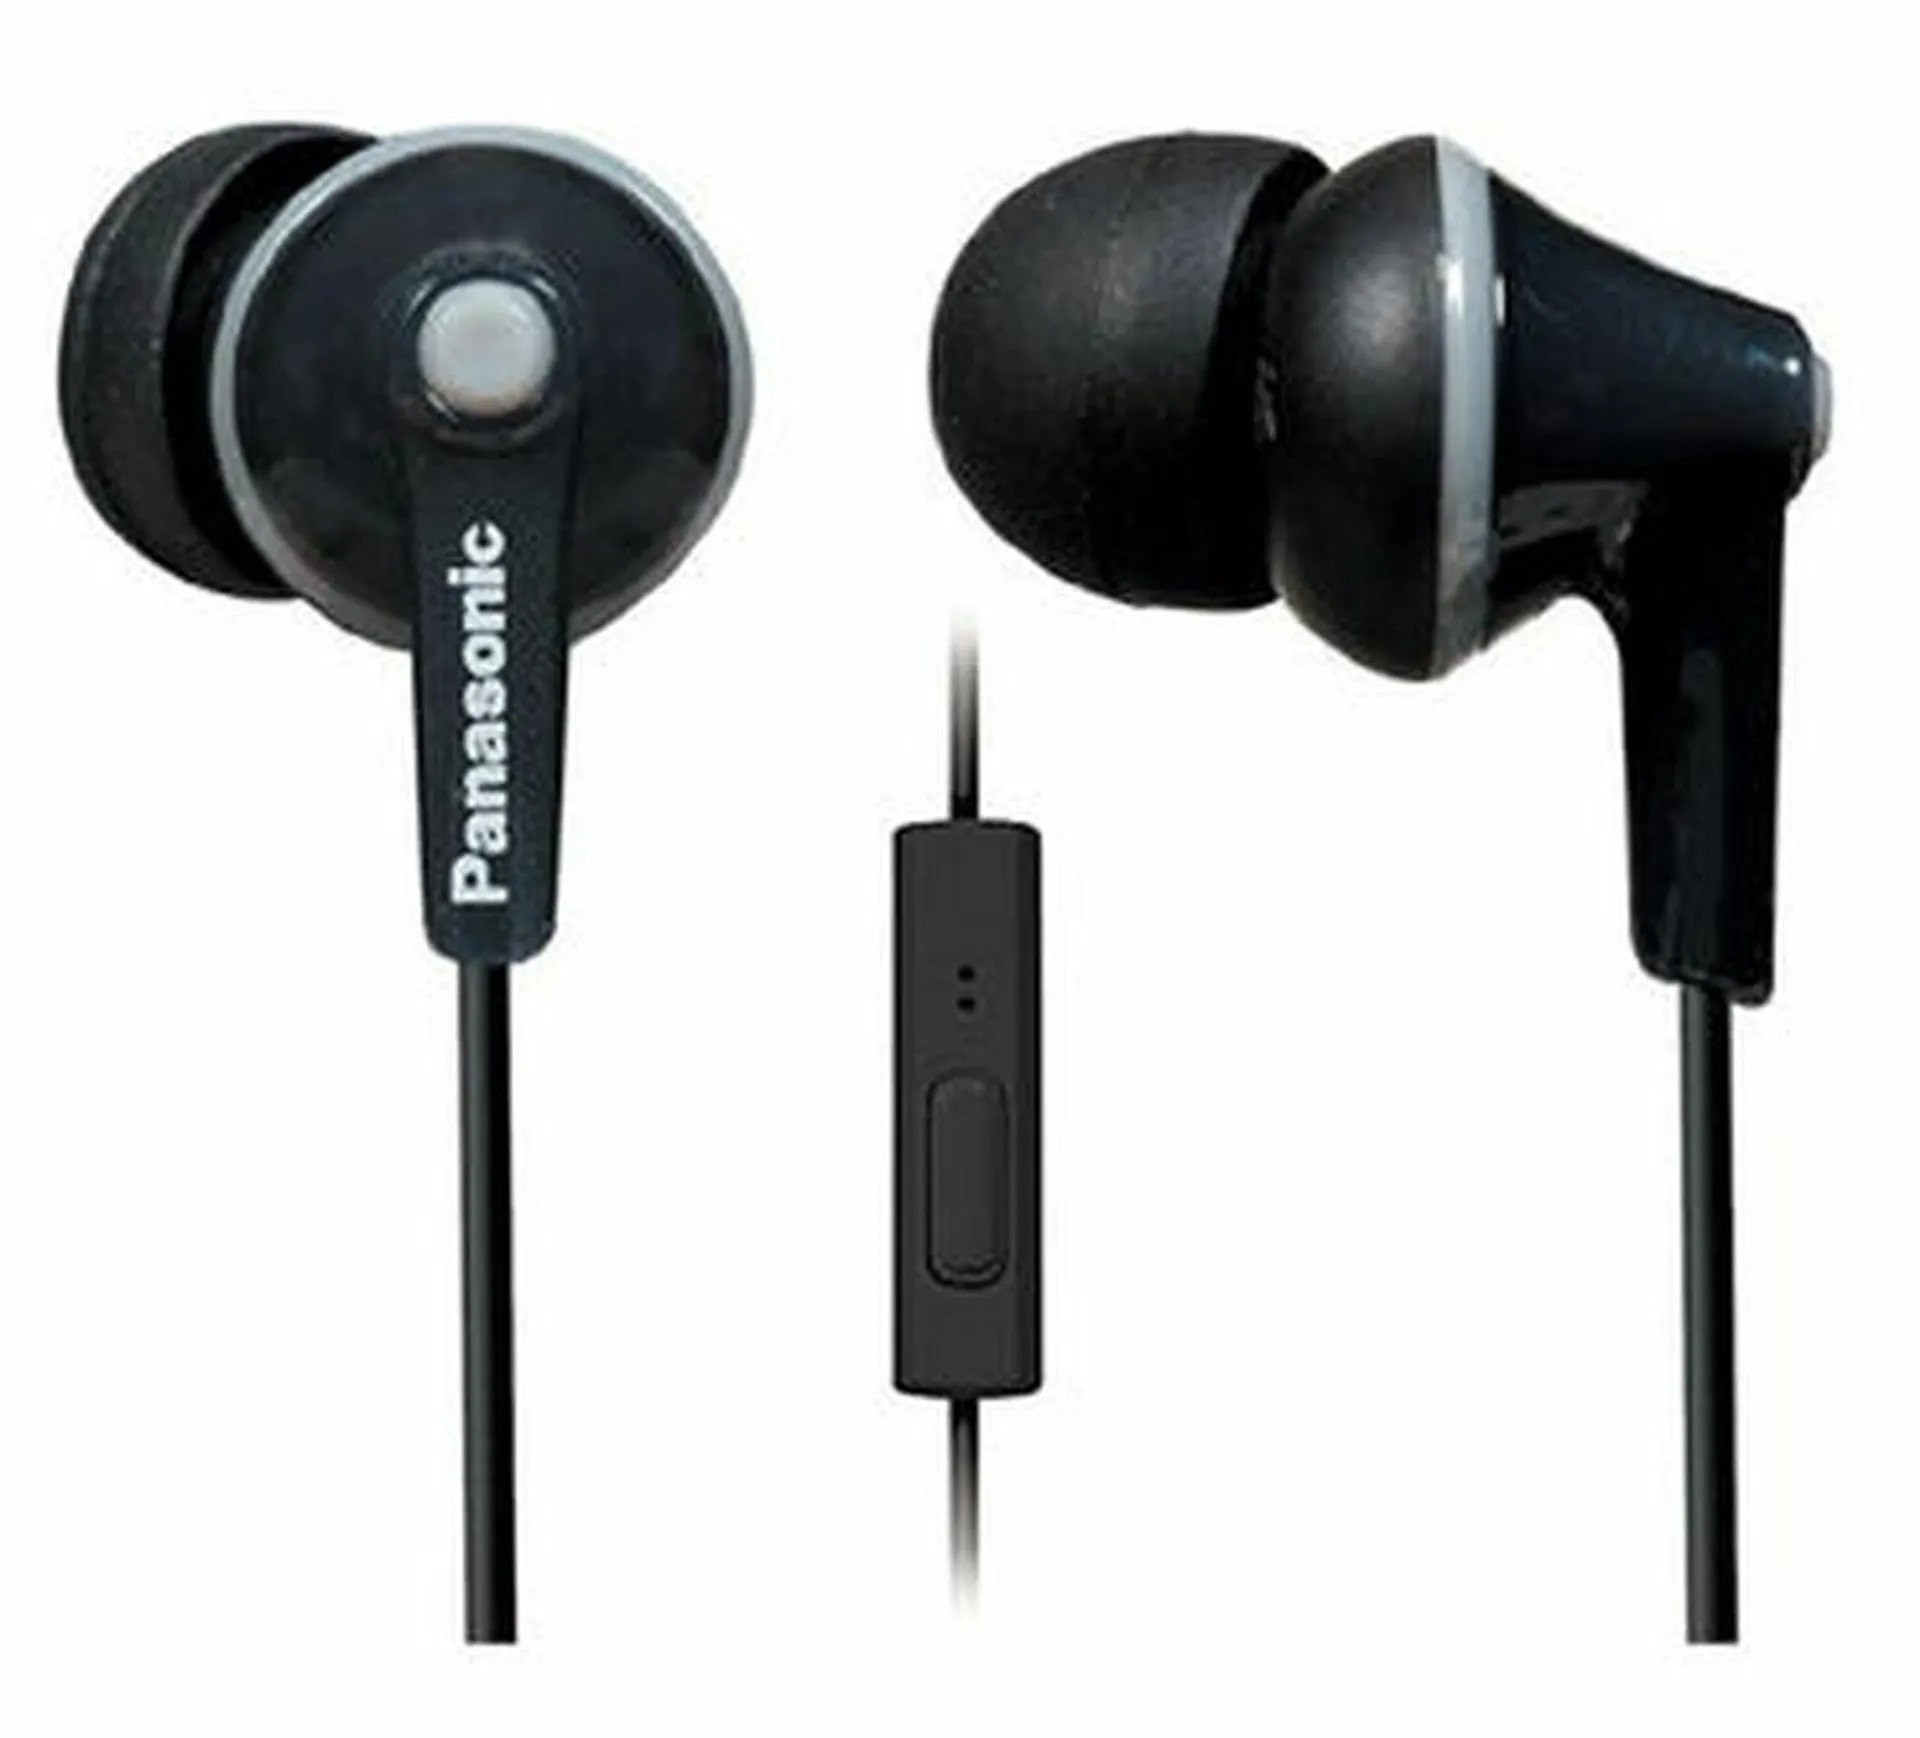 Panasonic - Rp-Tcm125-K - Ergofit In-Ear Headphones @ Mic & Remote - Black